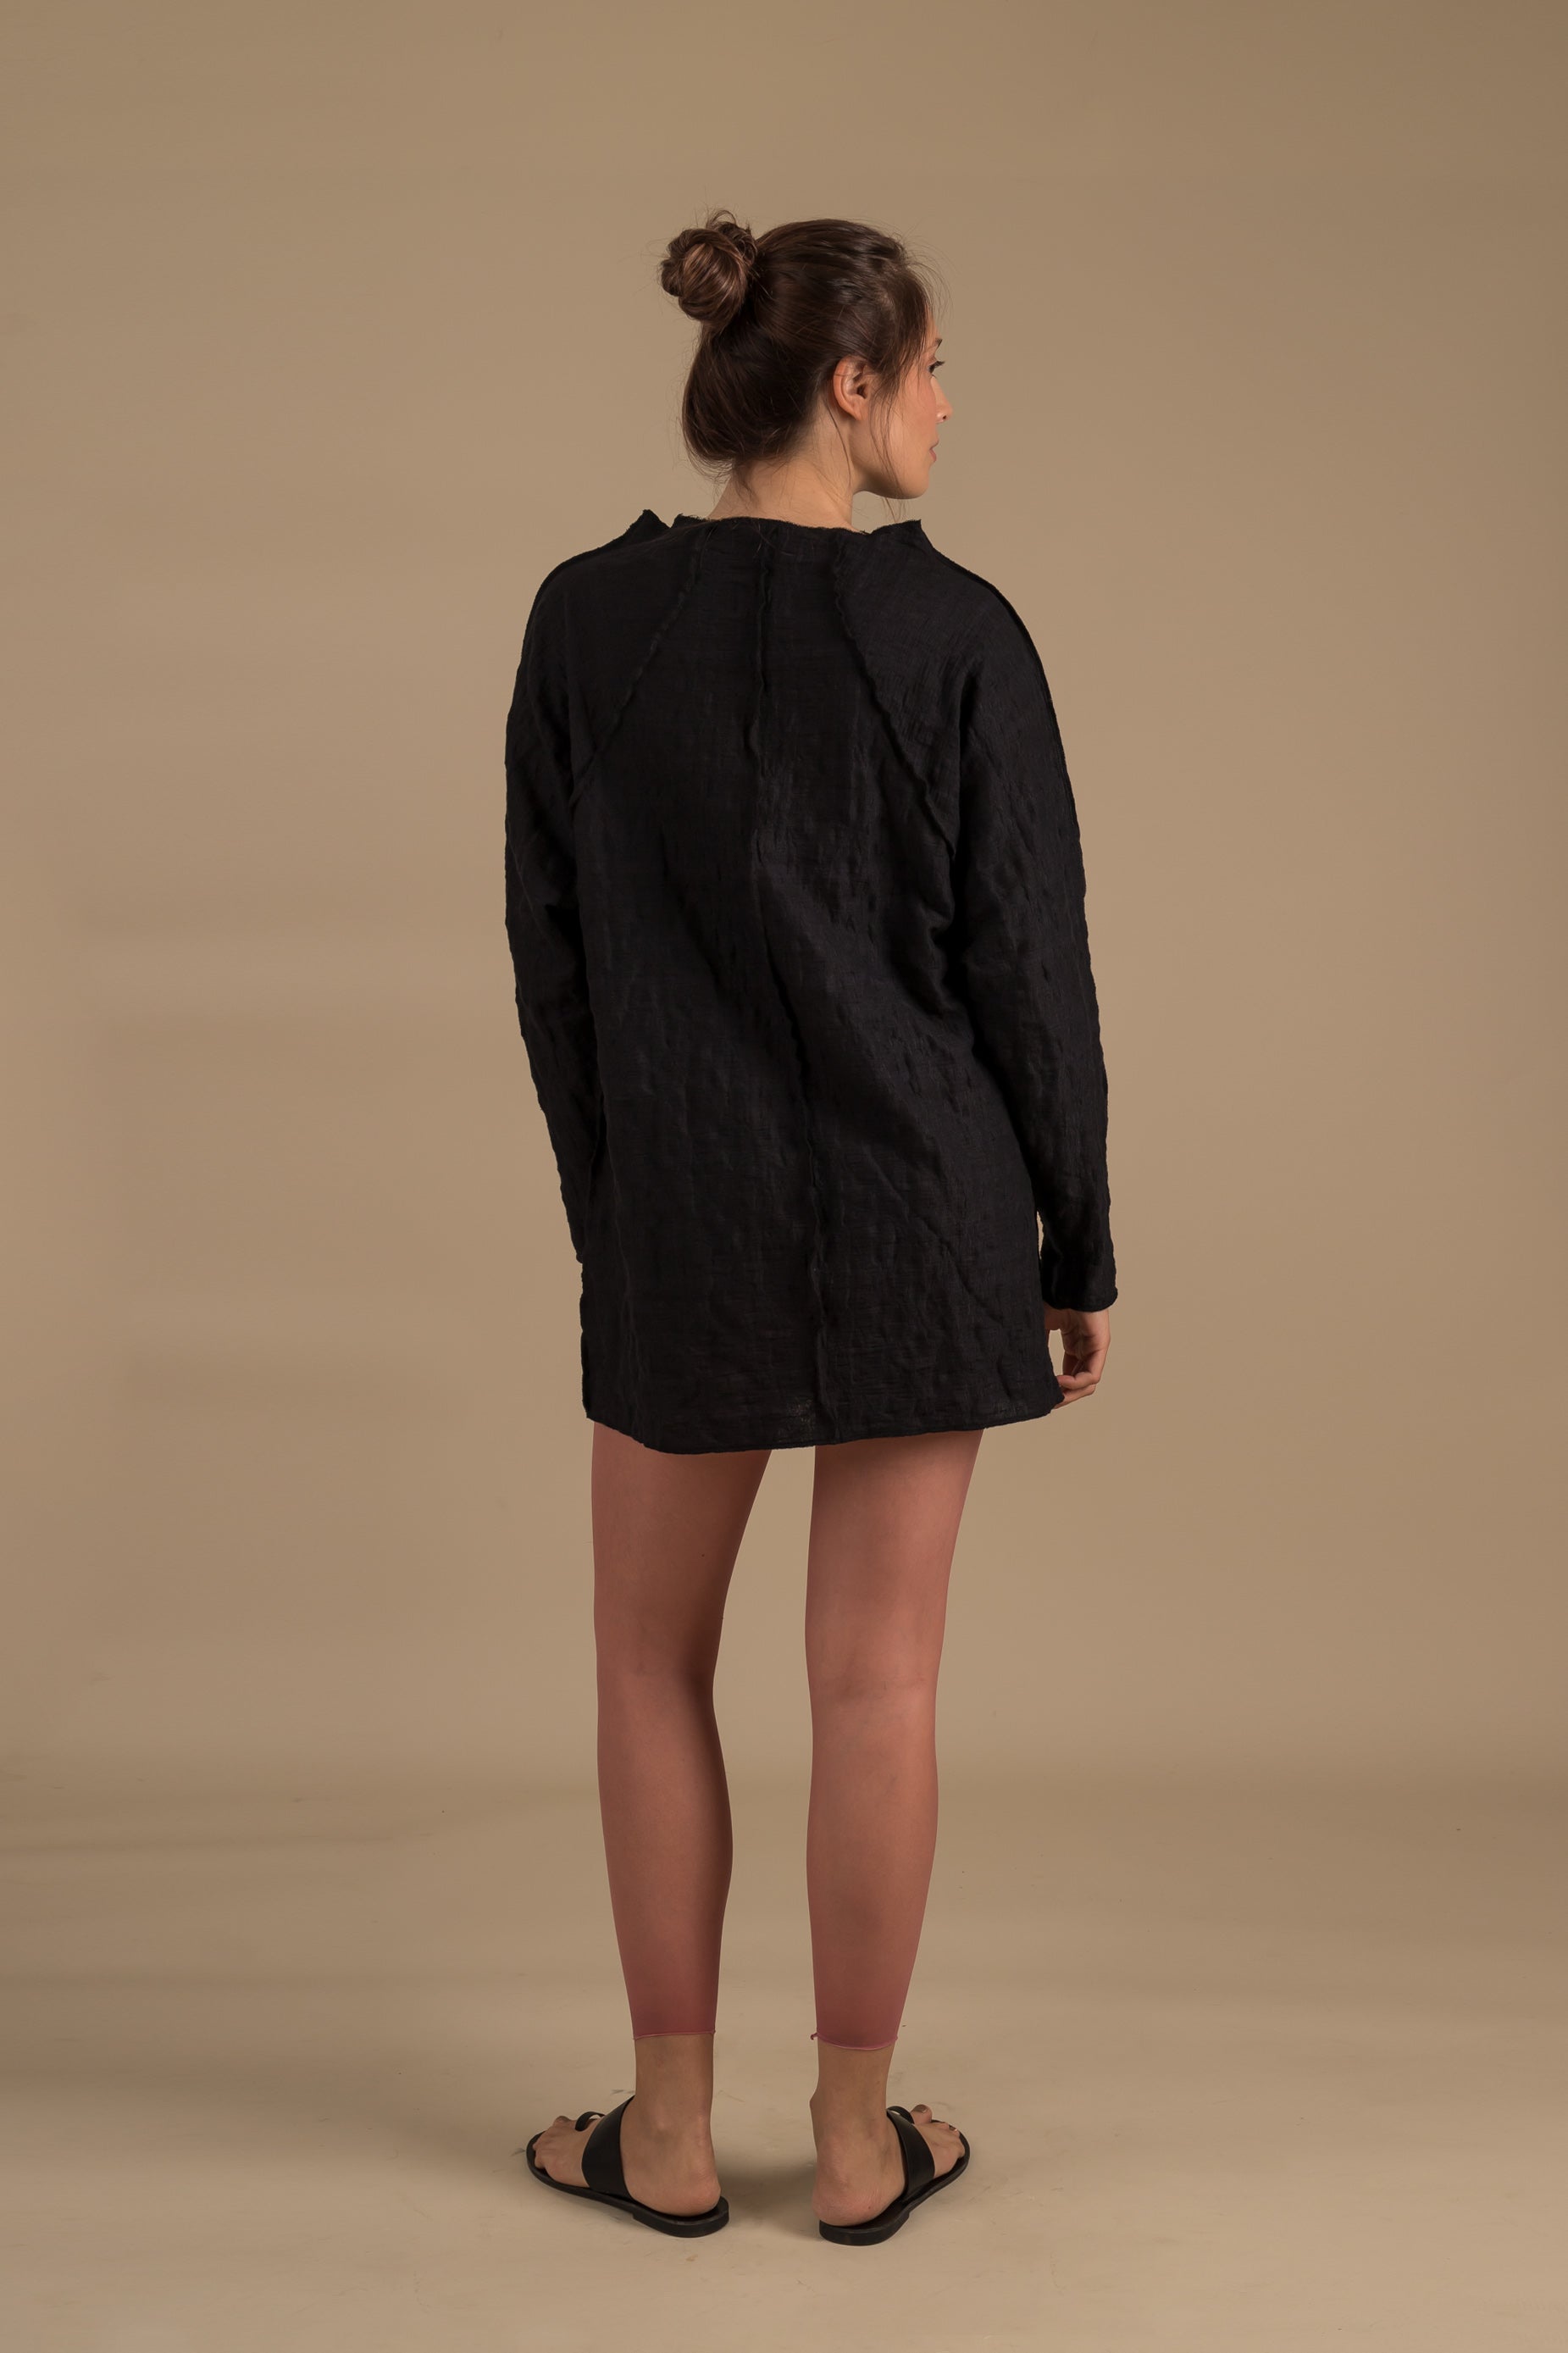 LACE Black Tunic Dress stand collar mini dress